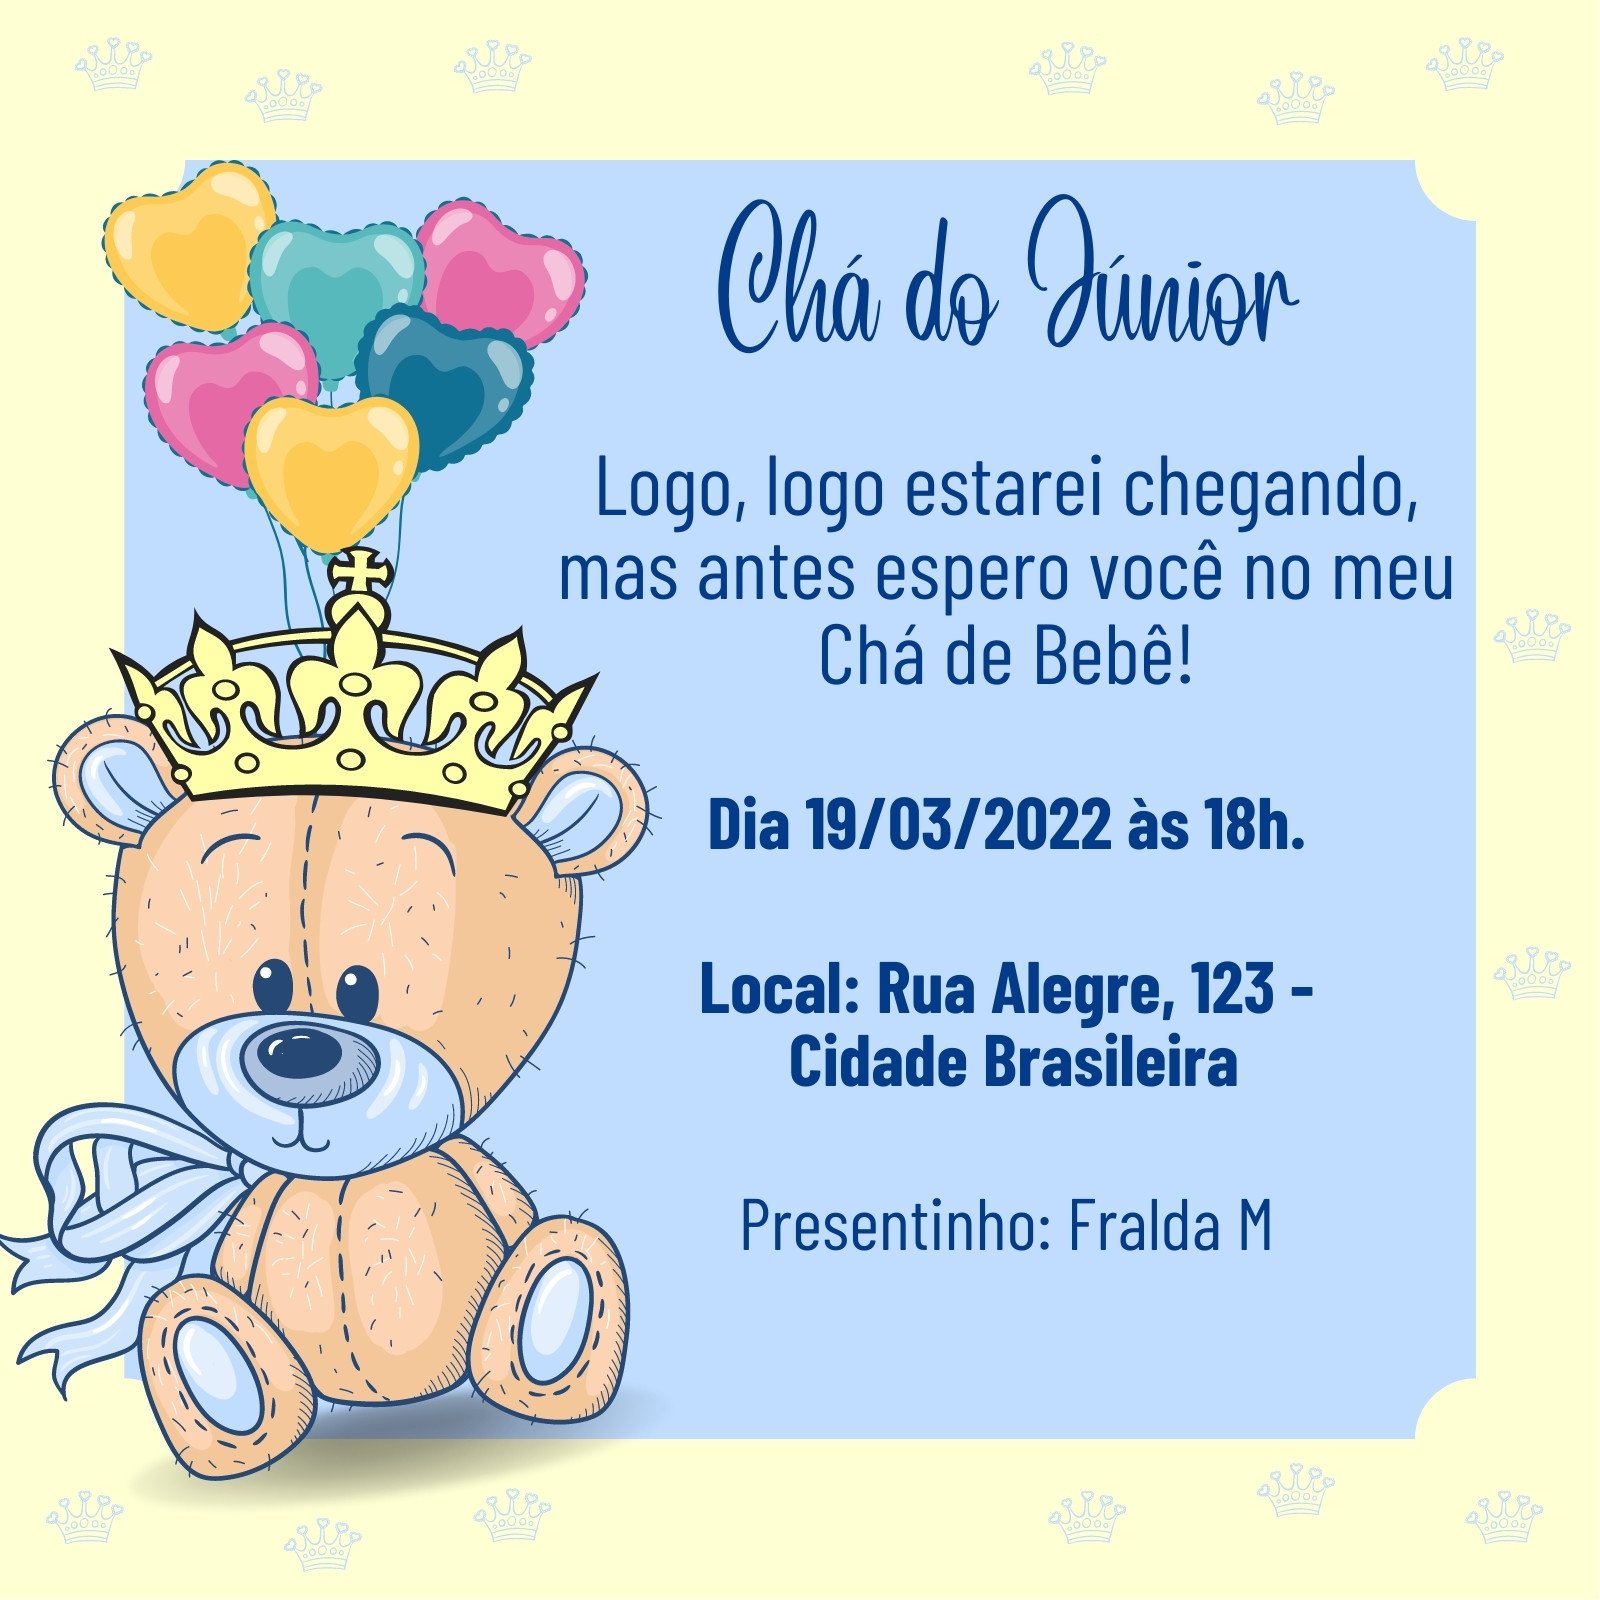 Convite Chá Bebê/ Fraldas - Modelo Convite Gael - Cha de Bebê/ Fraldas